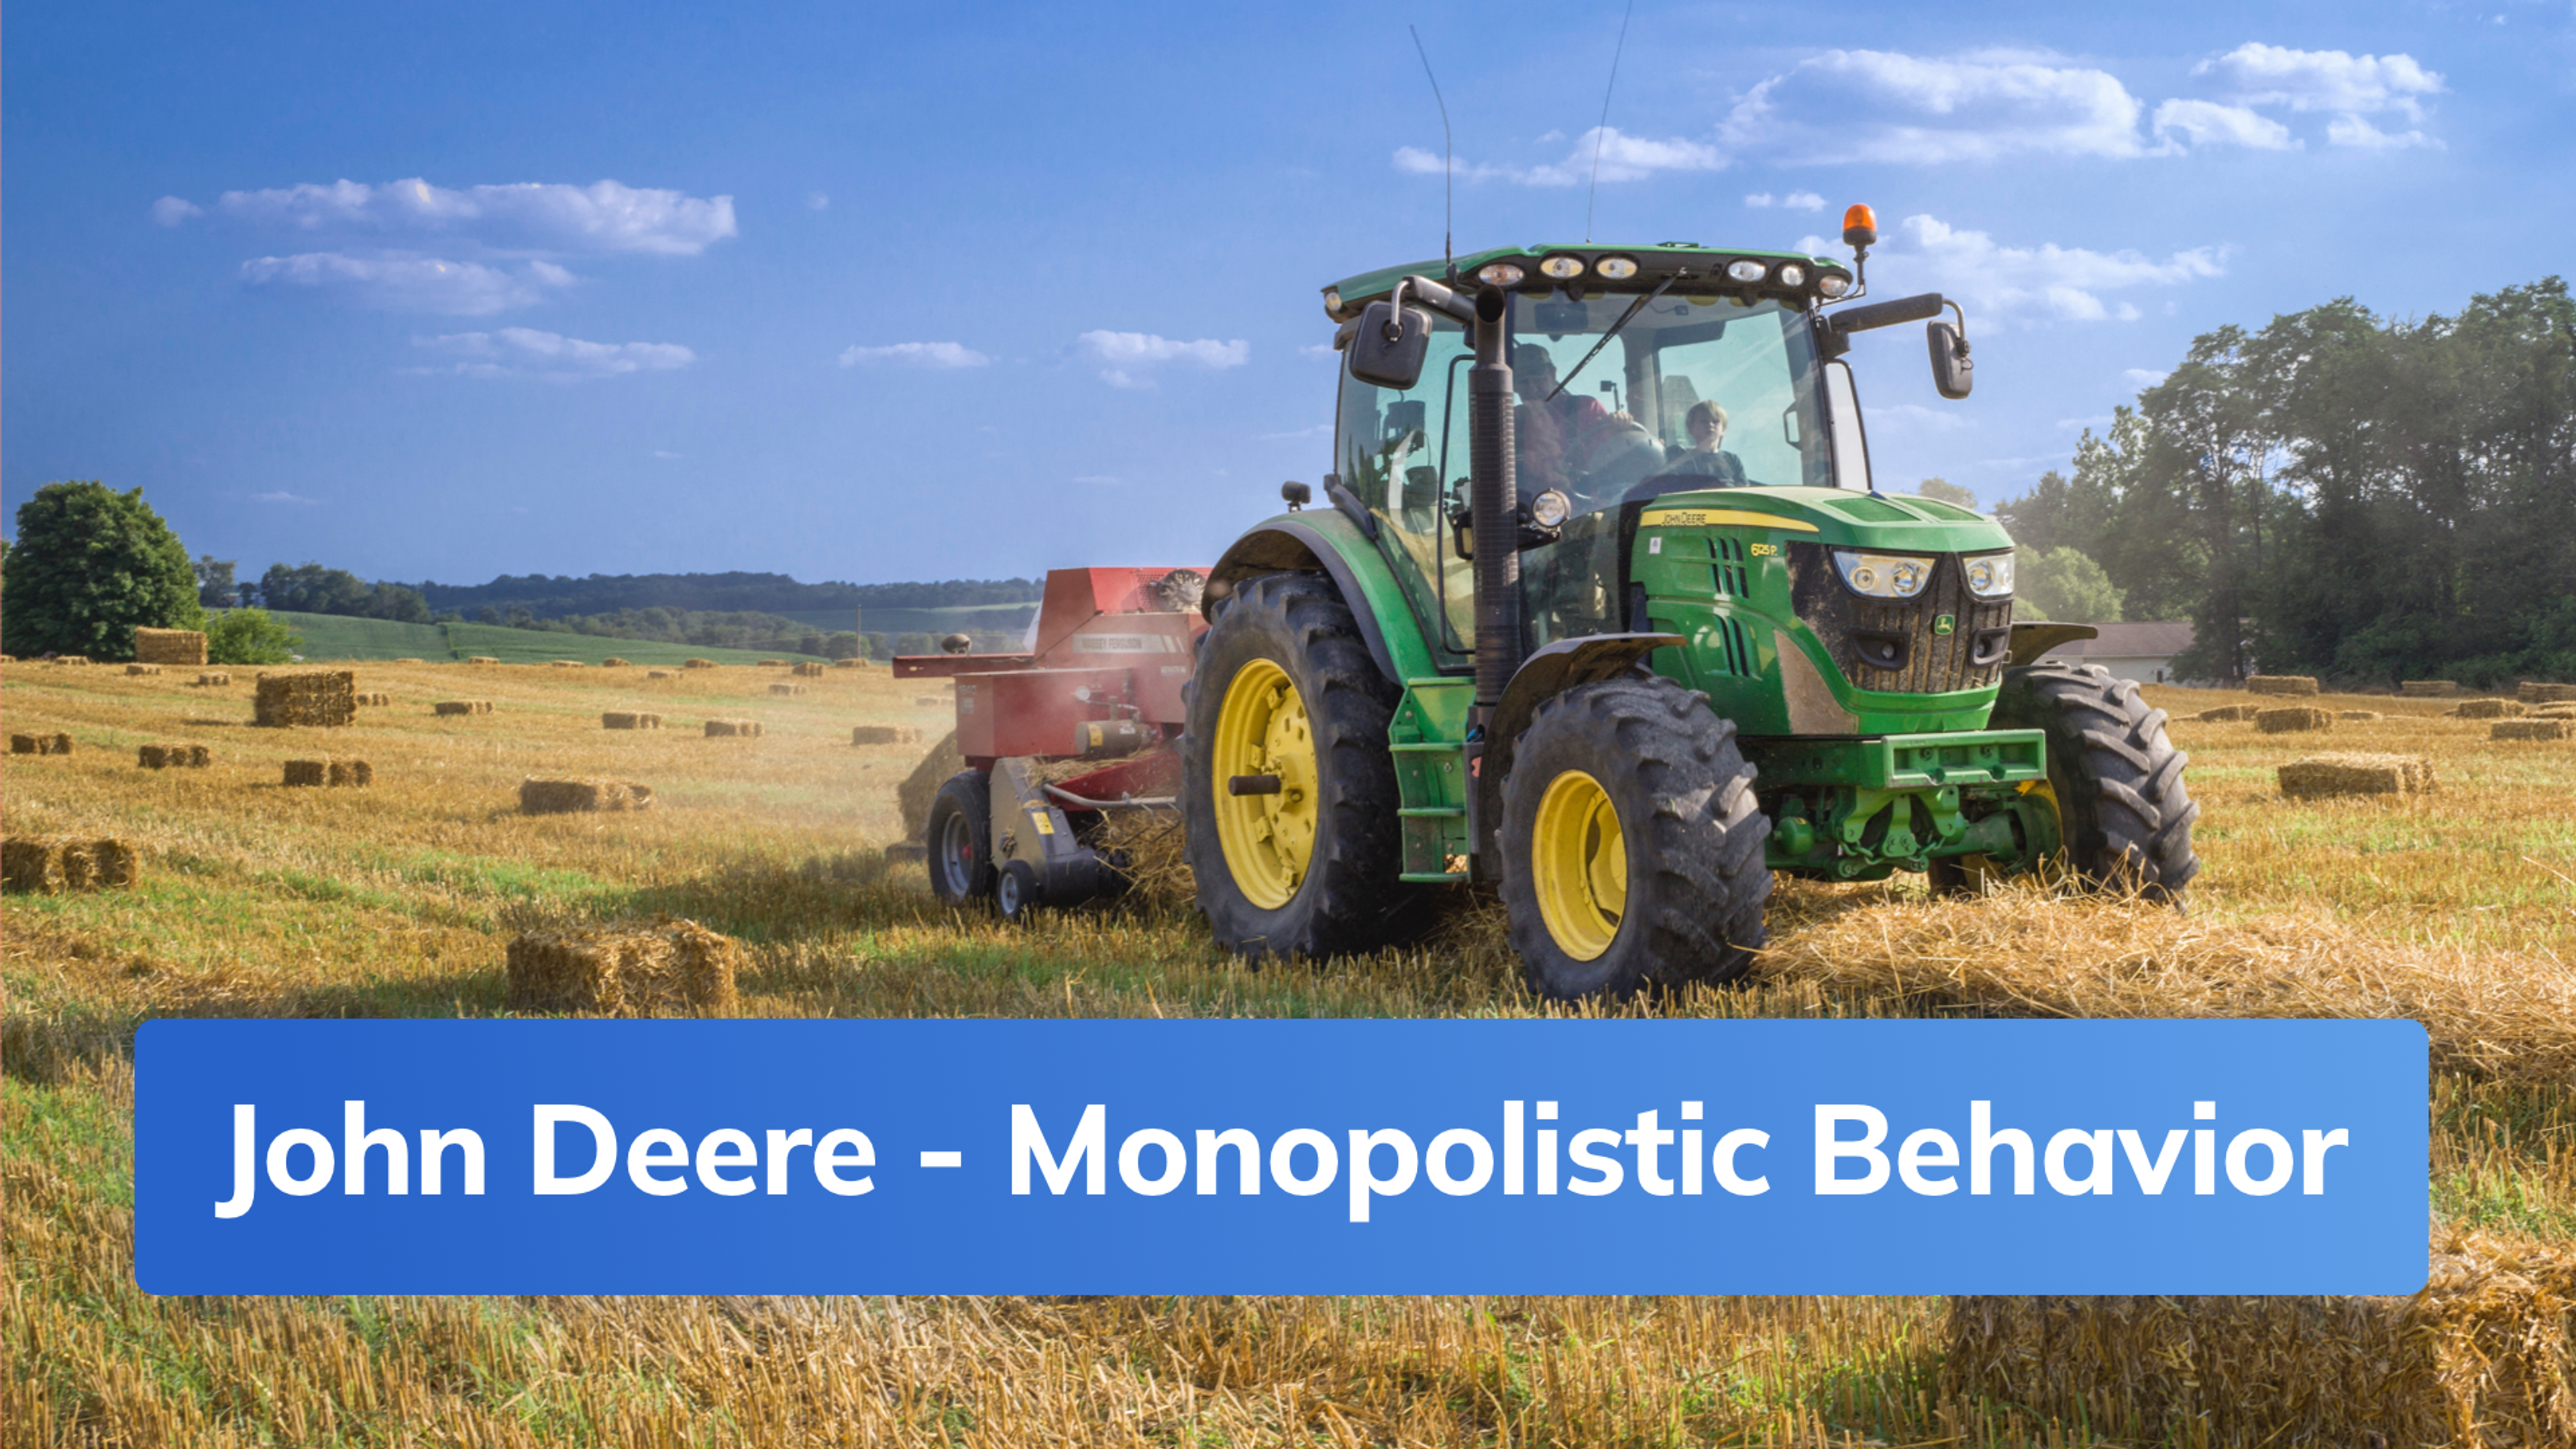 John Deere - Monopolistic Behavior